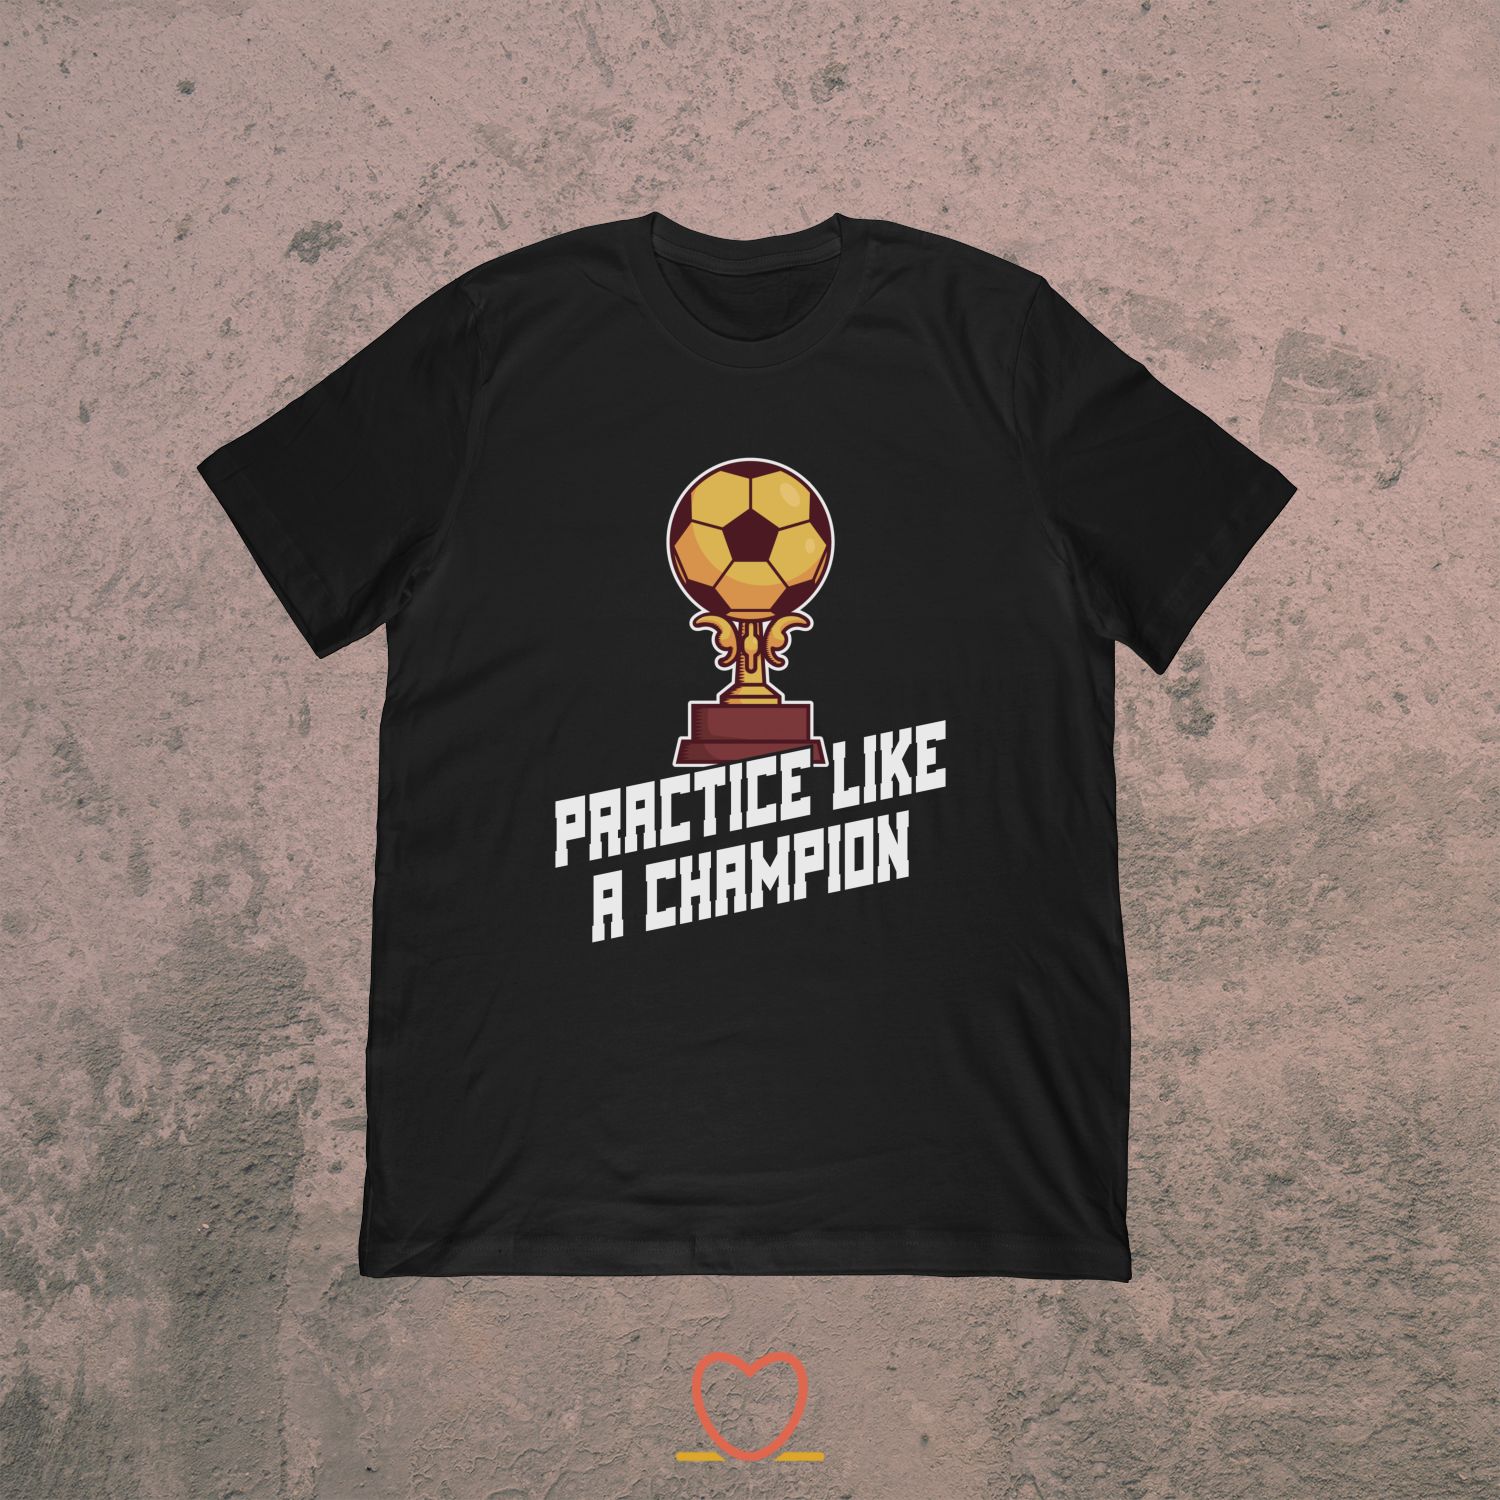 Practice Like A Champion – Soccer Champion Tee